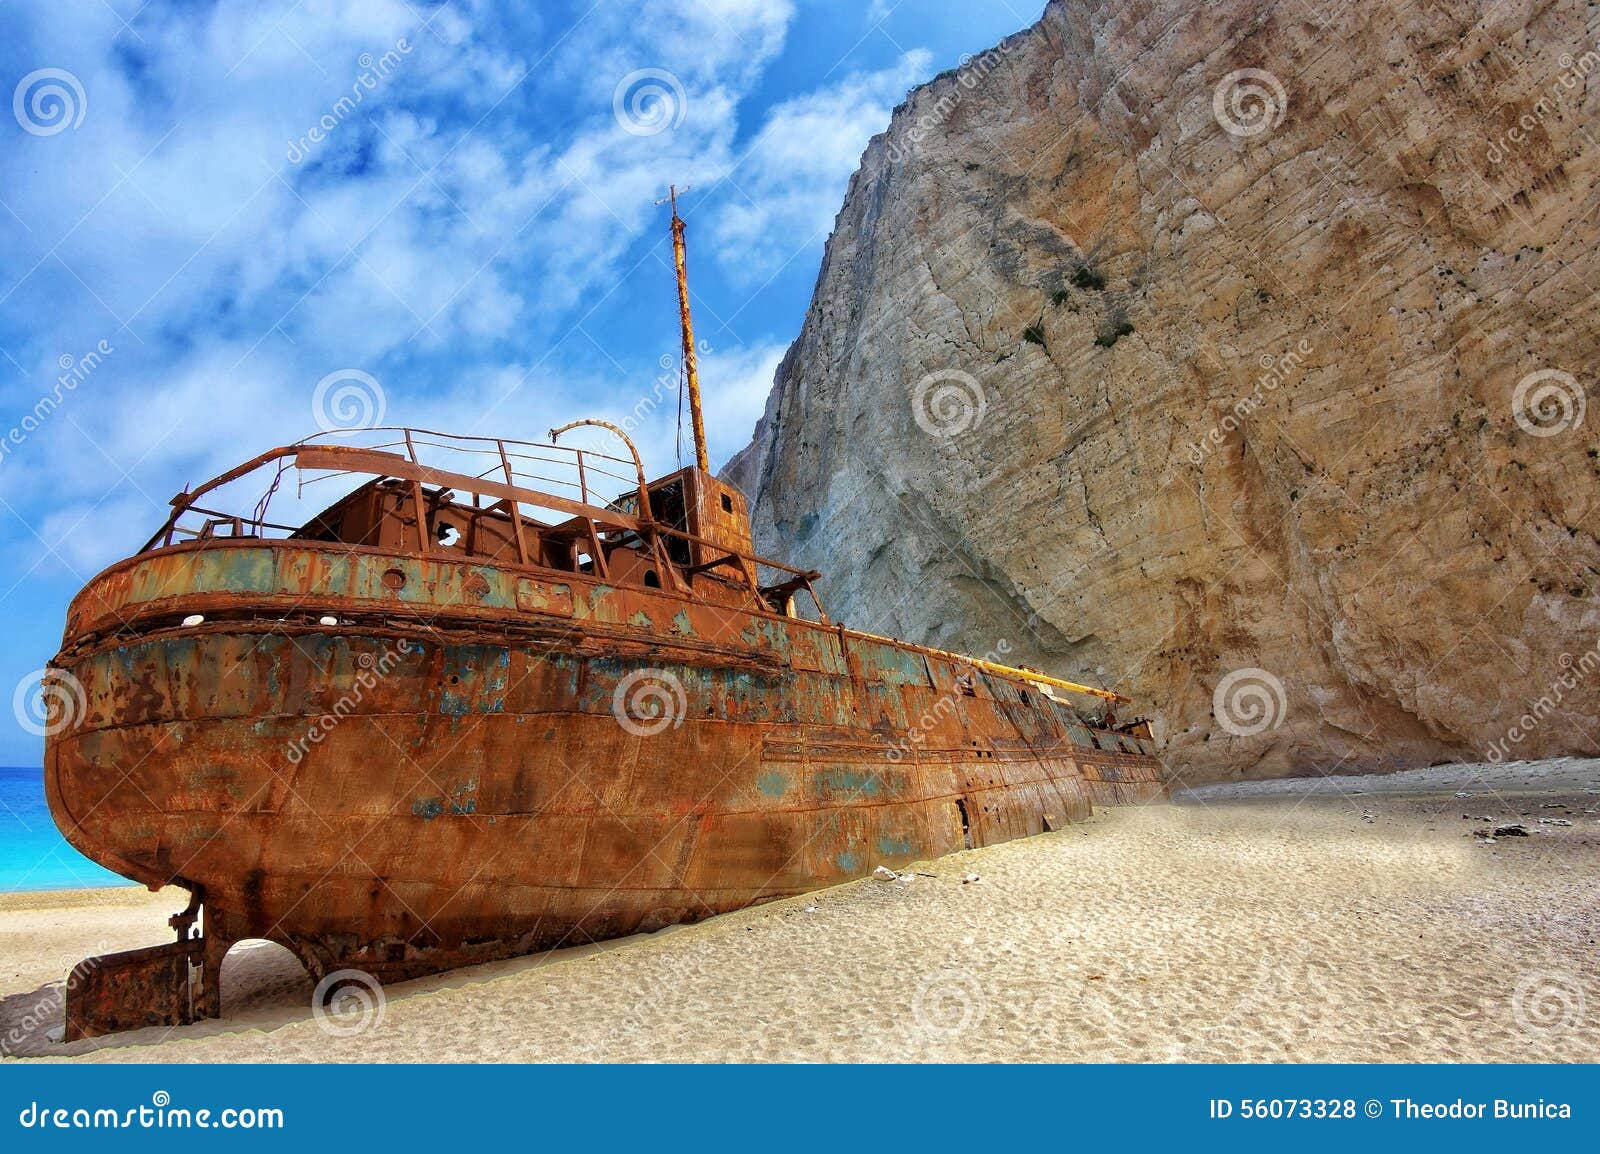 shipwreck on the navagio beach - zakynthos island, landmark attraction in greece. ionian sea. seascape